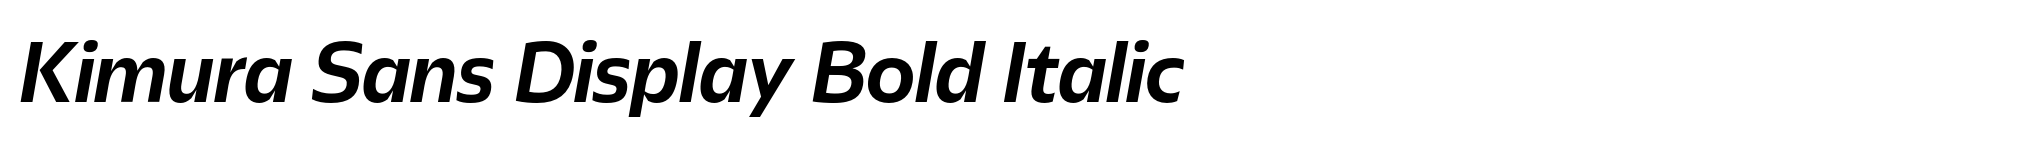 Kimura Sans Display Bold Italic image